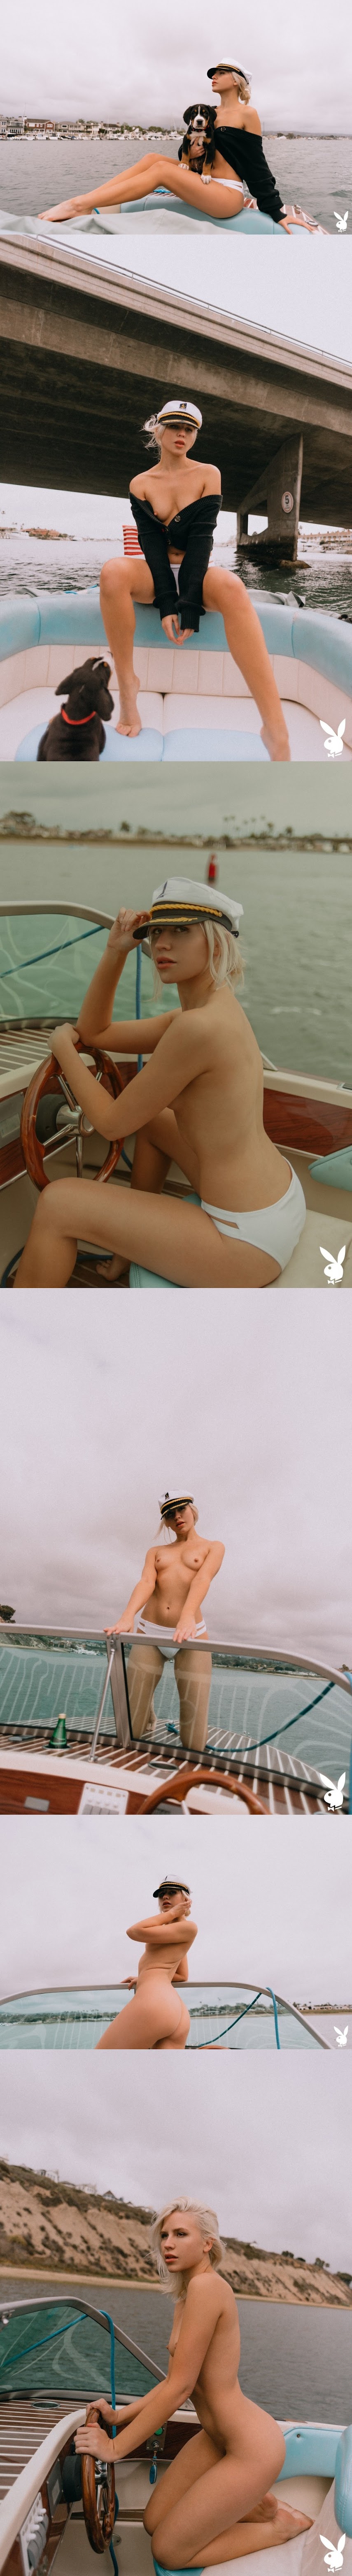 [Playboy Plus] Lennon Elizabeth in Out at Sea playboy-plus 09200 